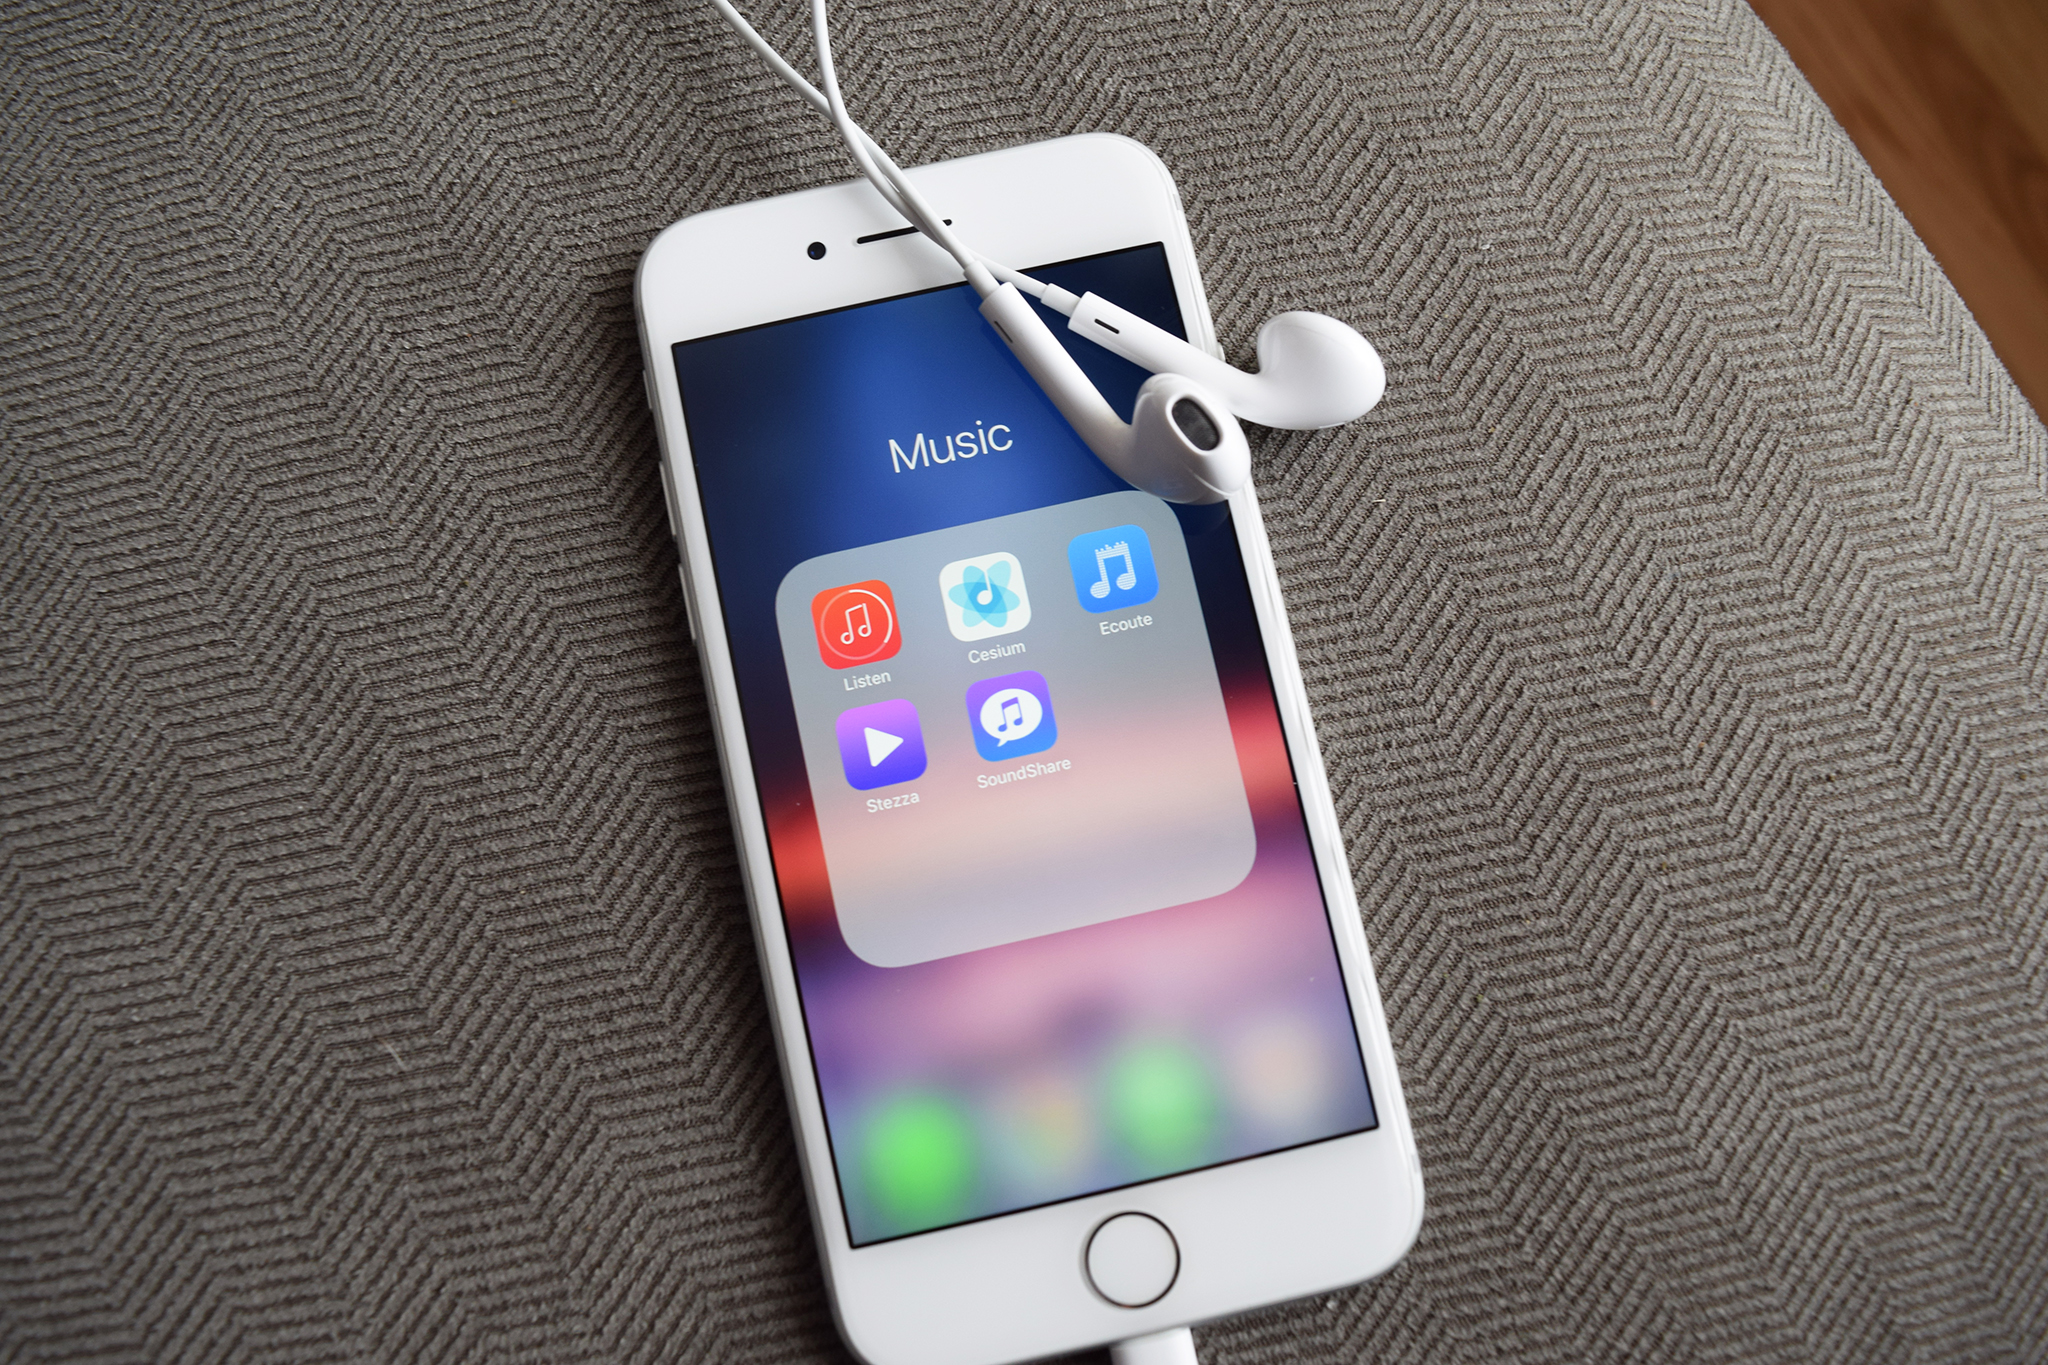 Image result for Listen music player apple app store